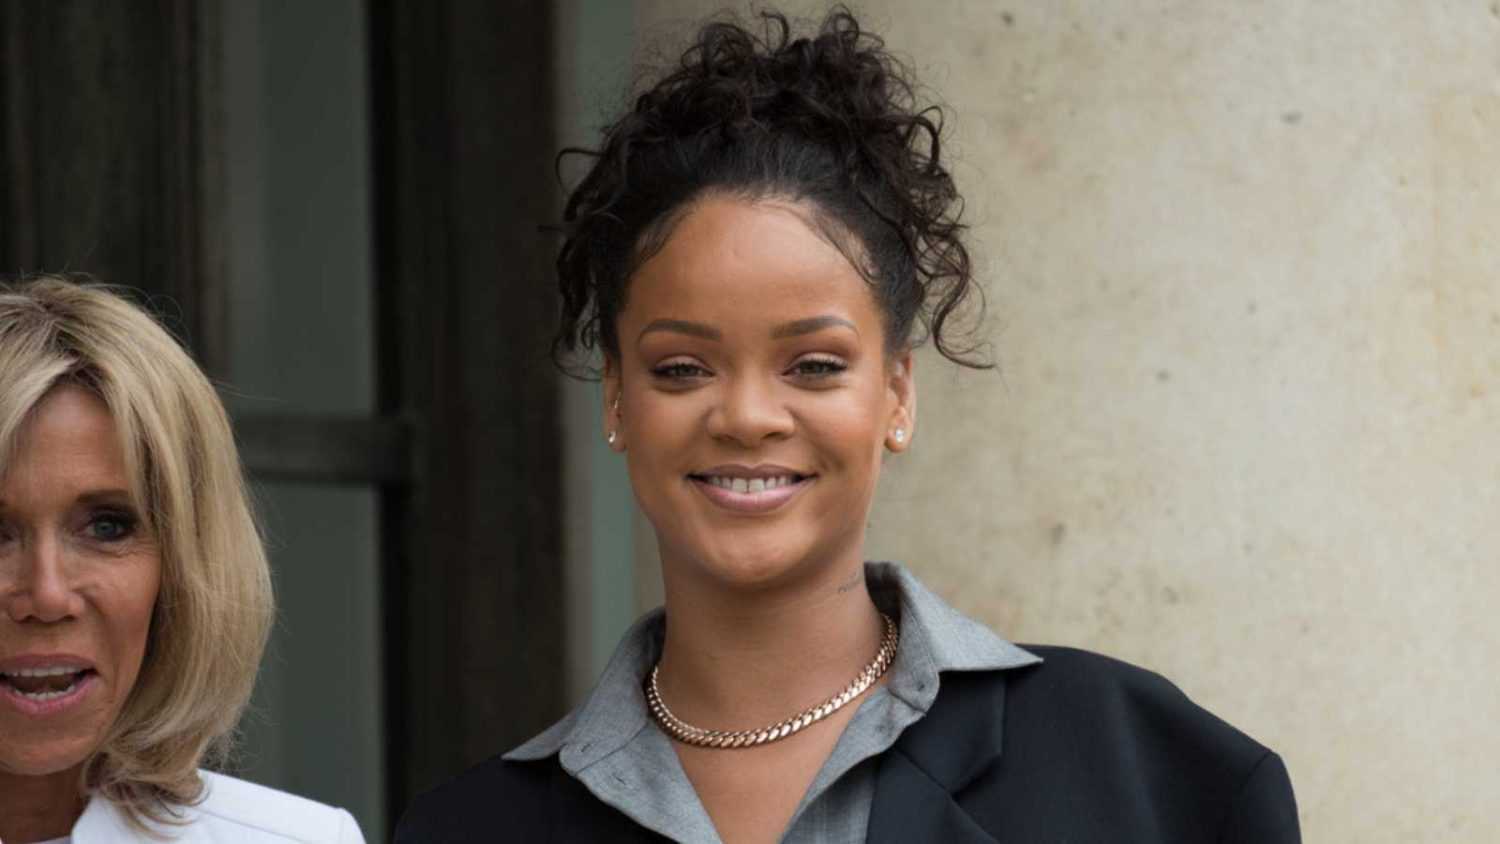 PARIS, FRANCE - JULY 26, 2017 - Singer Rihanna (Robyn Rihanna Fenty) at the Elysée Palace to present the program of her association about children's education.